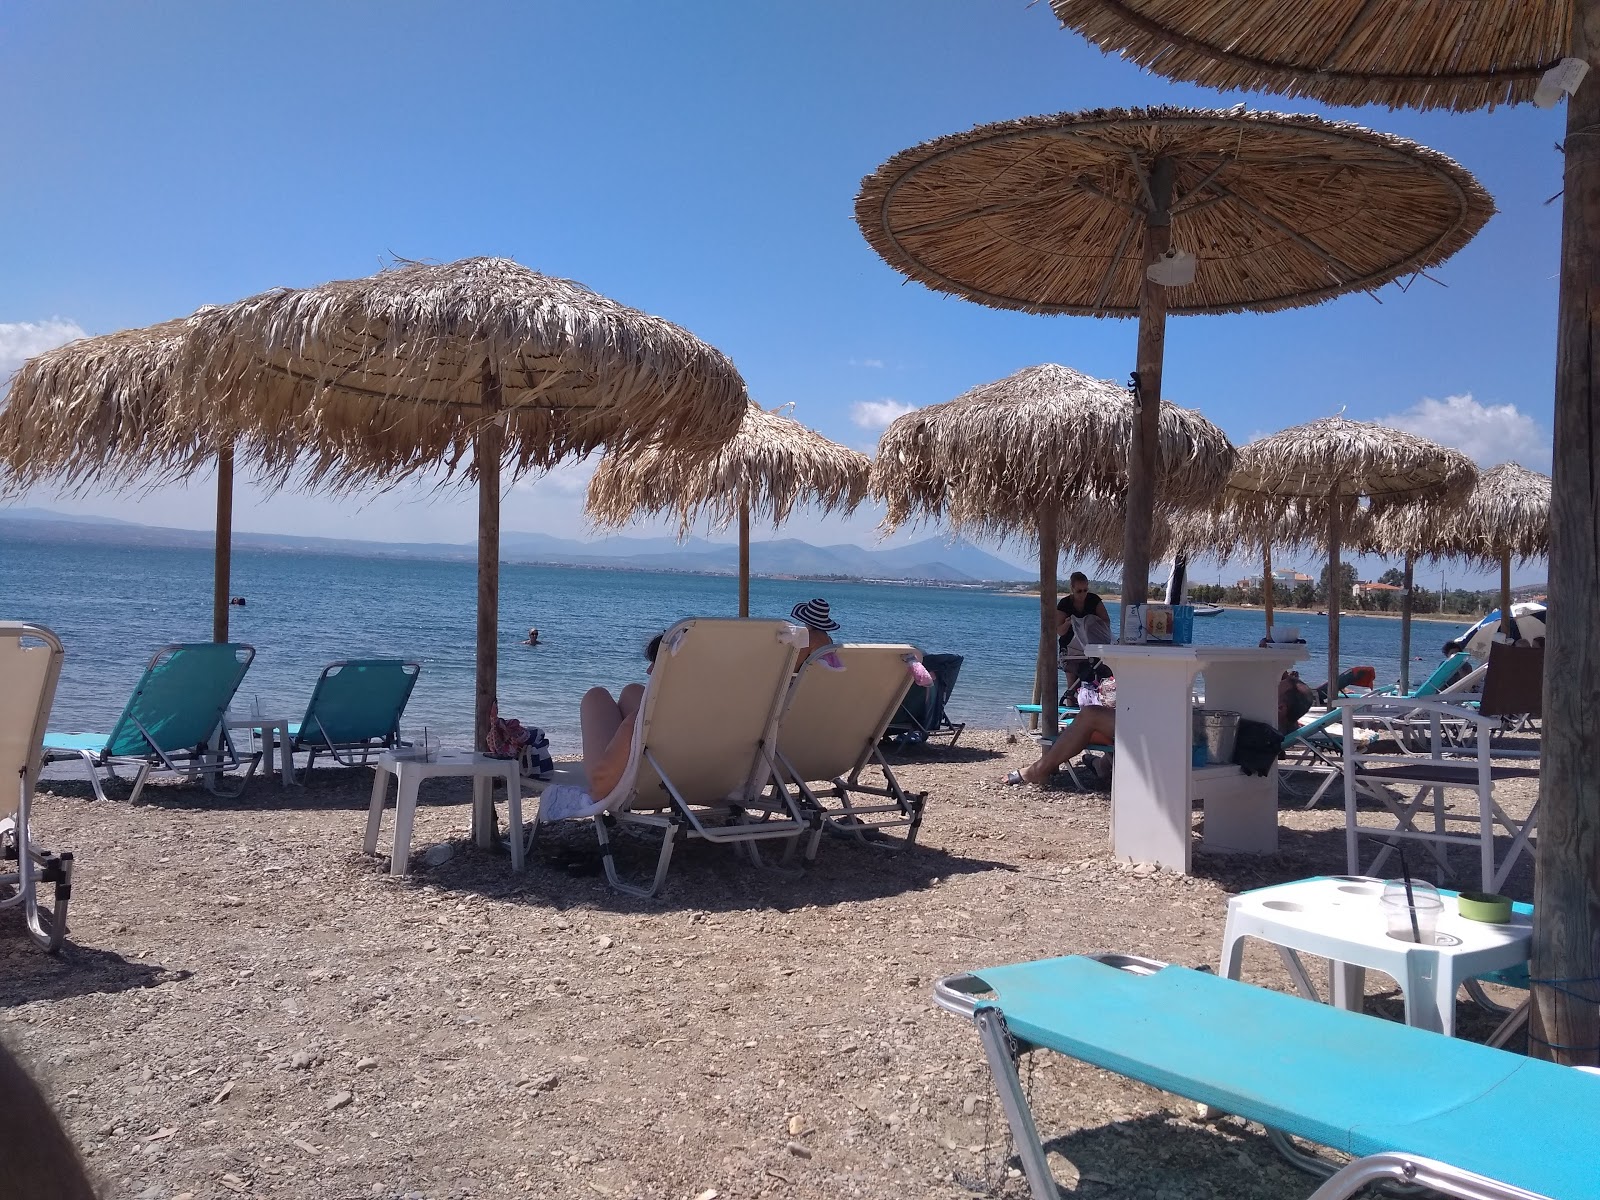 Foto af Agios Andreas beach faciliteter område